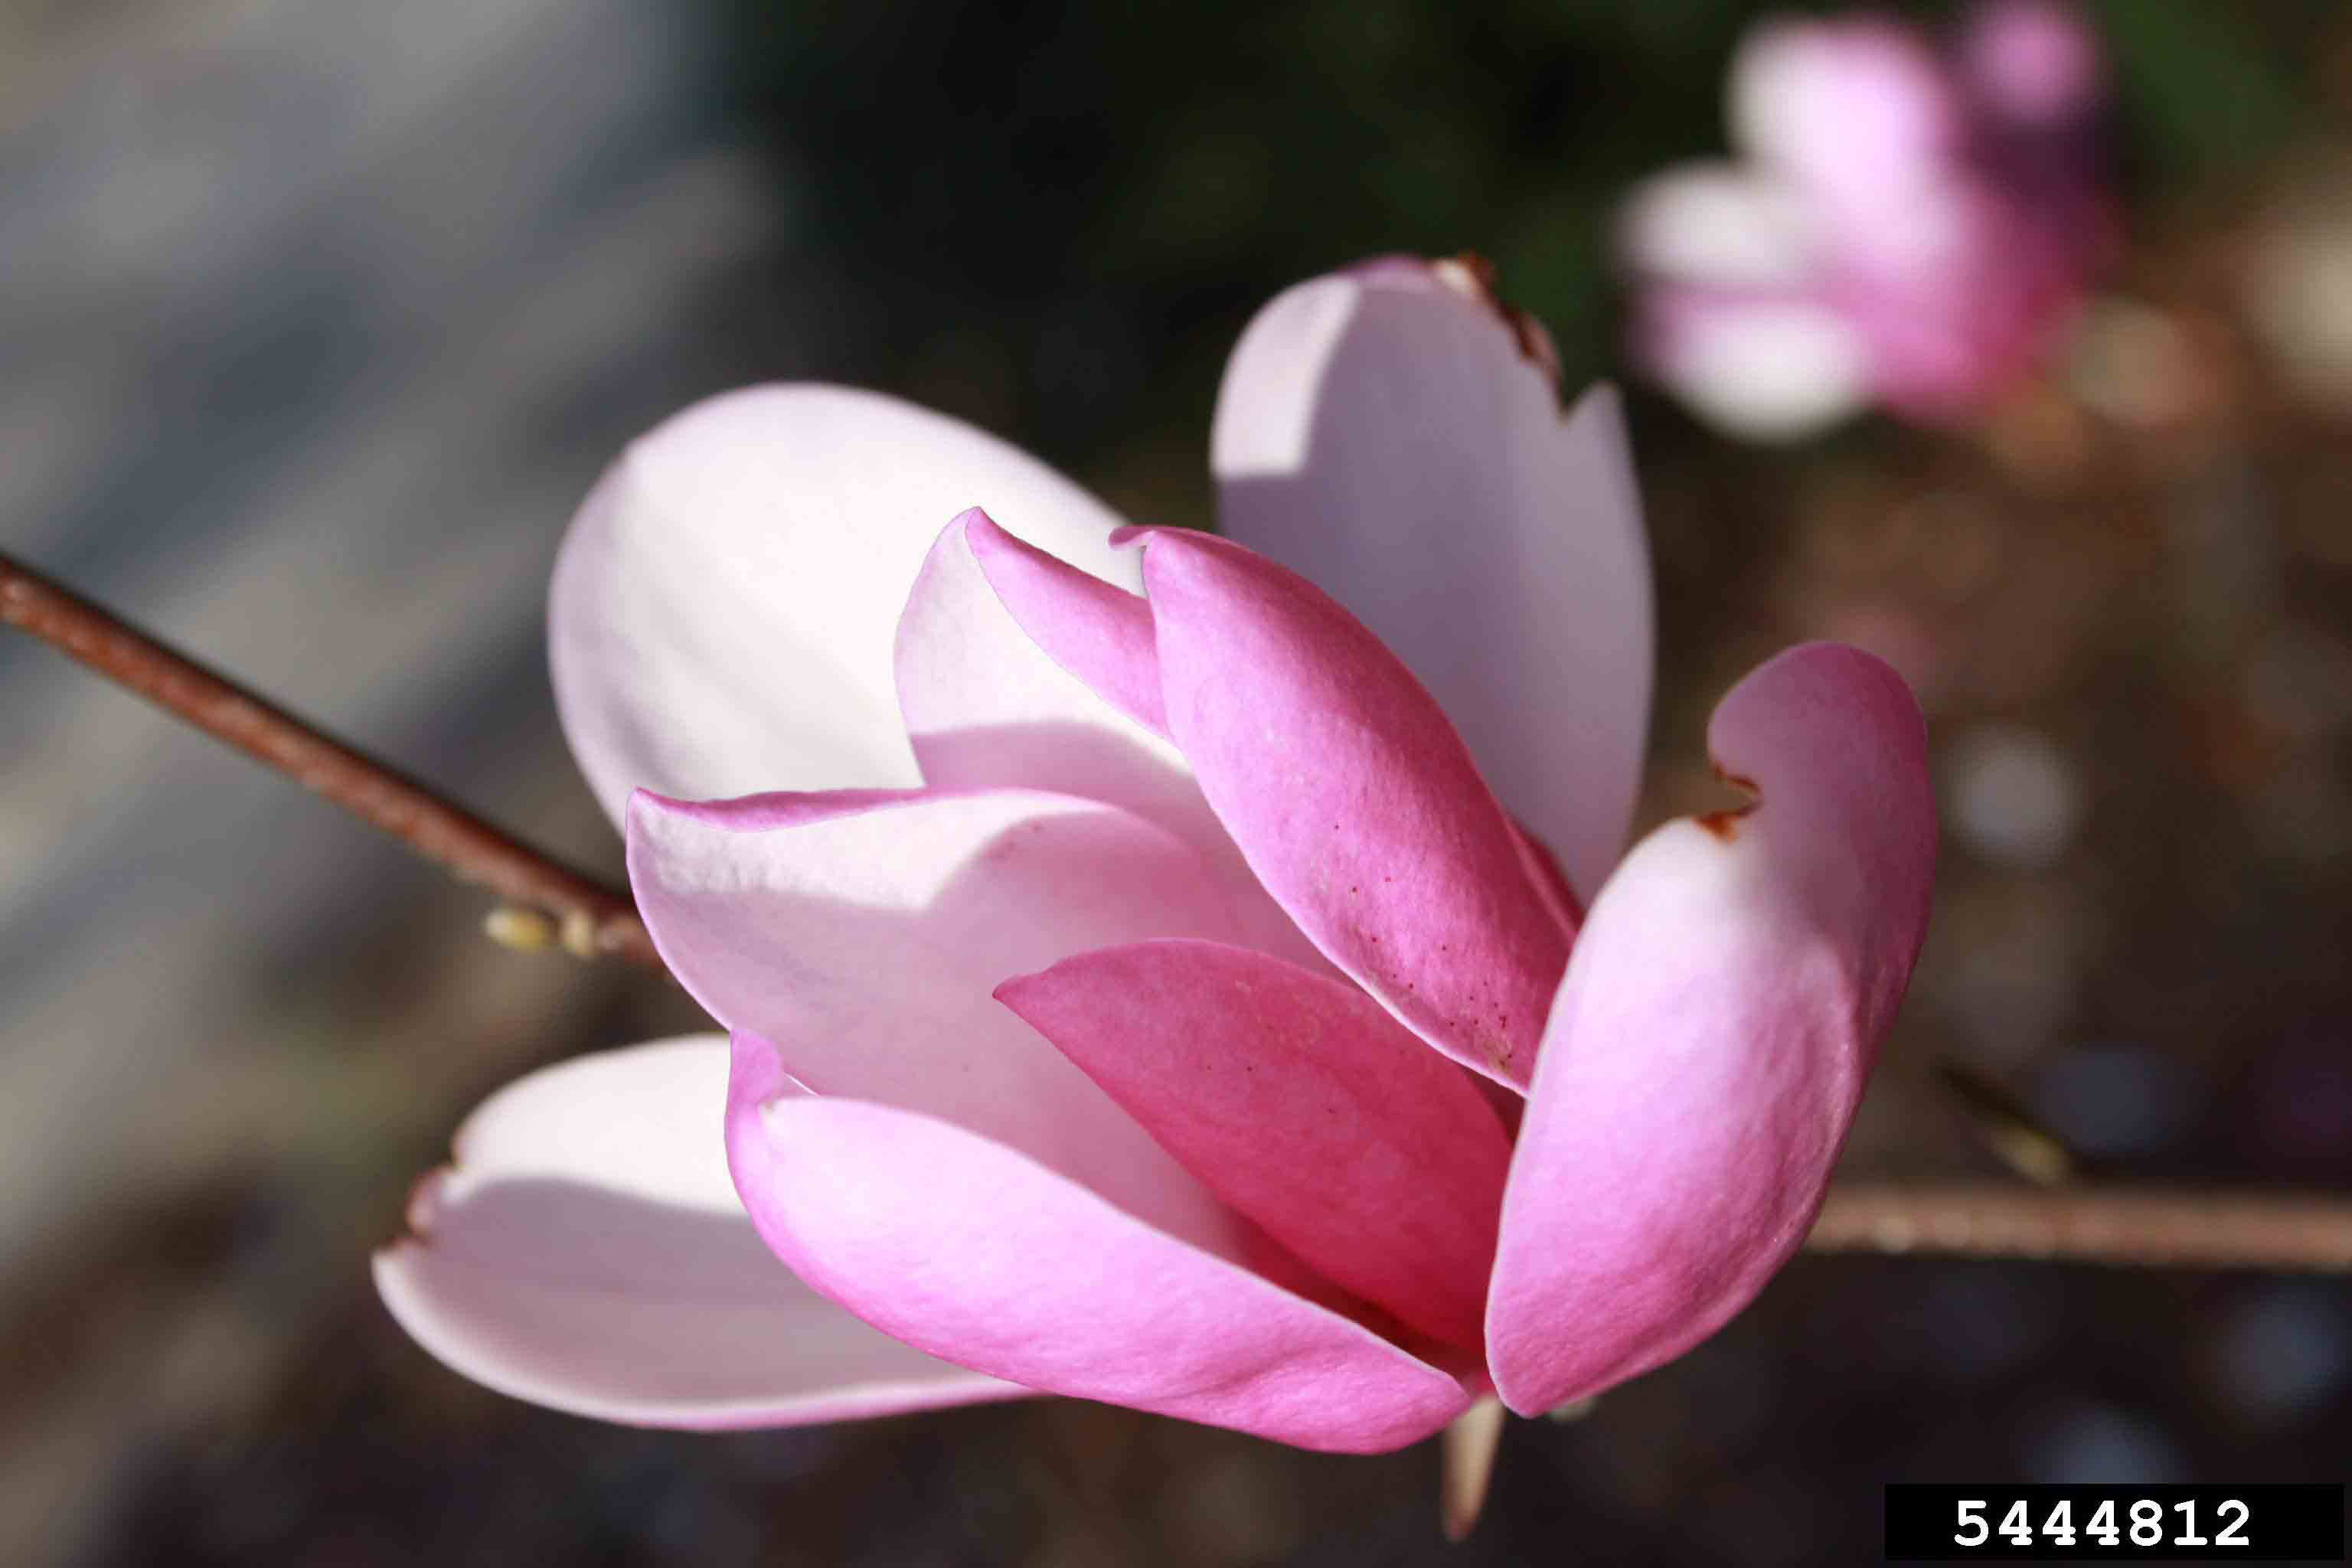 Saucer magnolia flower